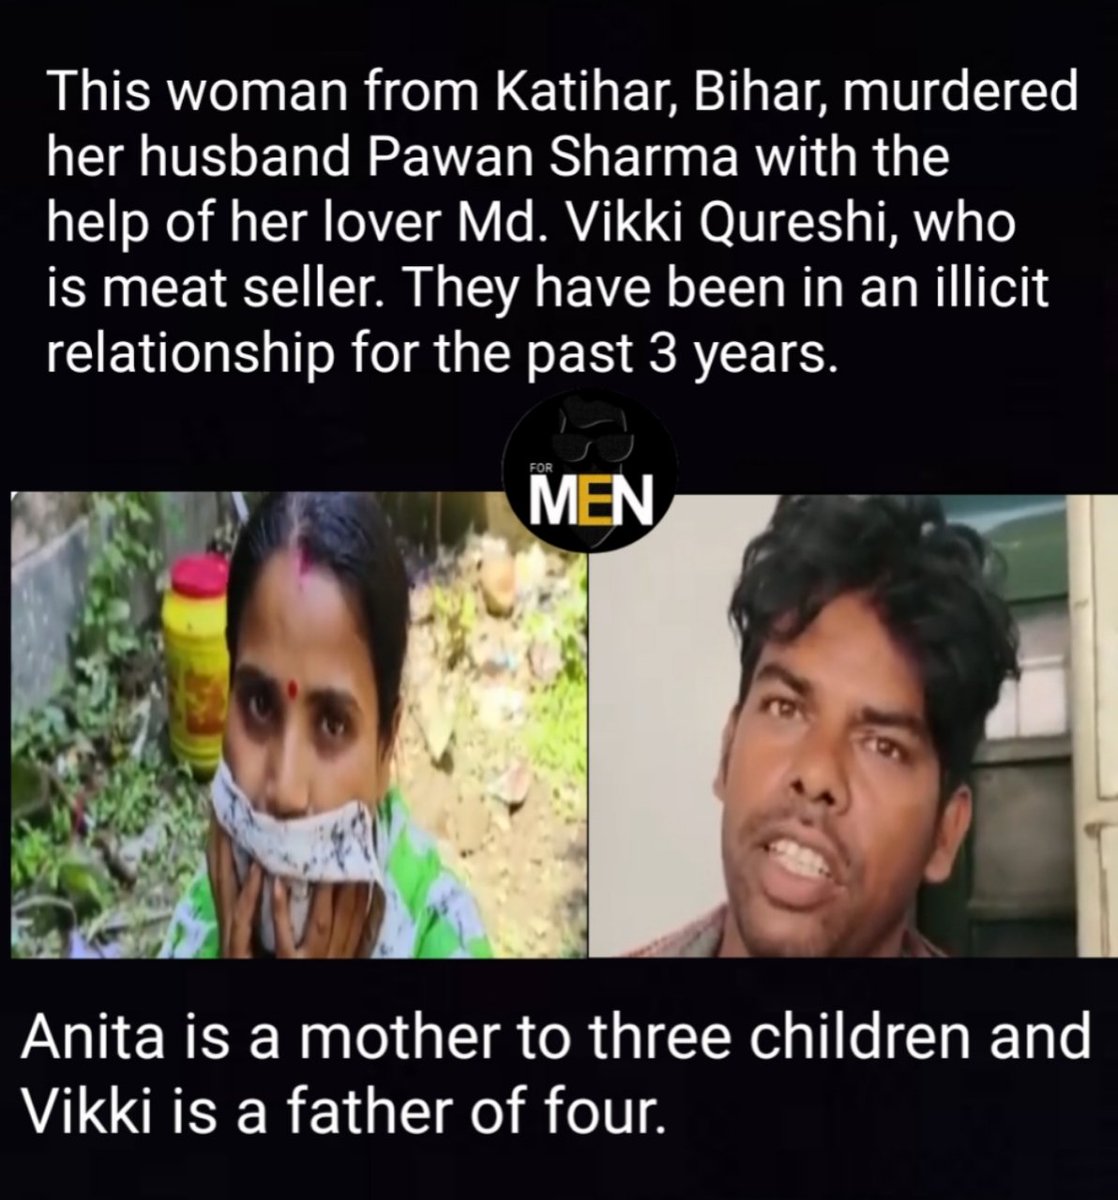 This 'Bihar Story' is seriously insane. 

#formenindia #fakefeminism #MurderCase #BiharNews #mentoo #menmattertoo